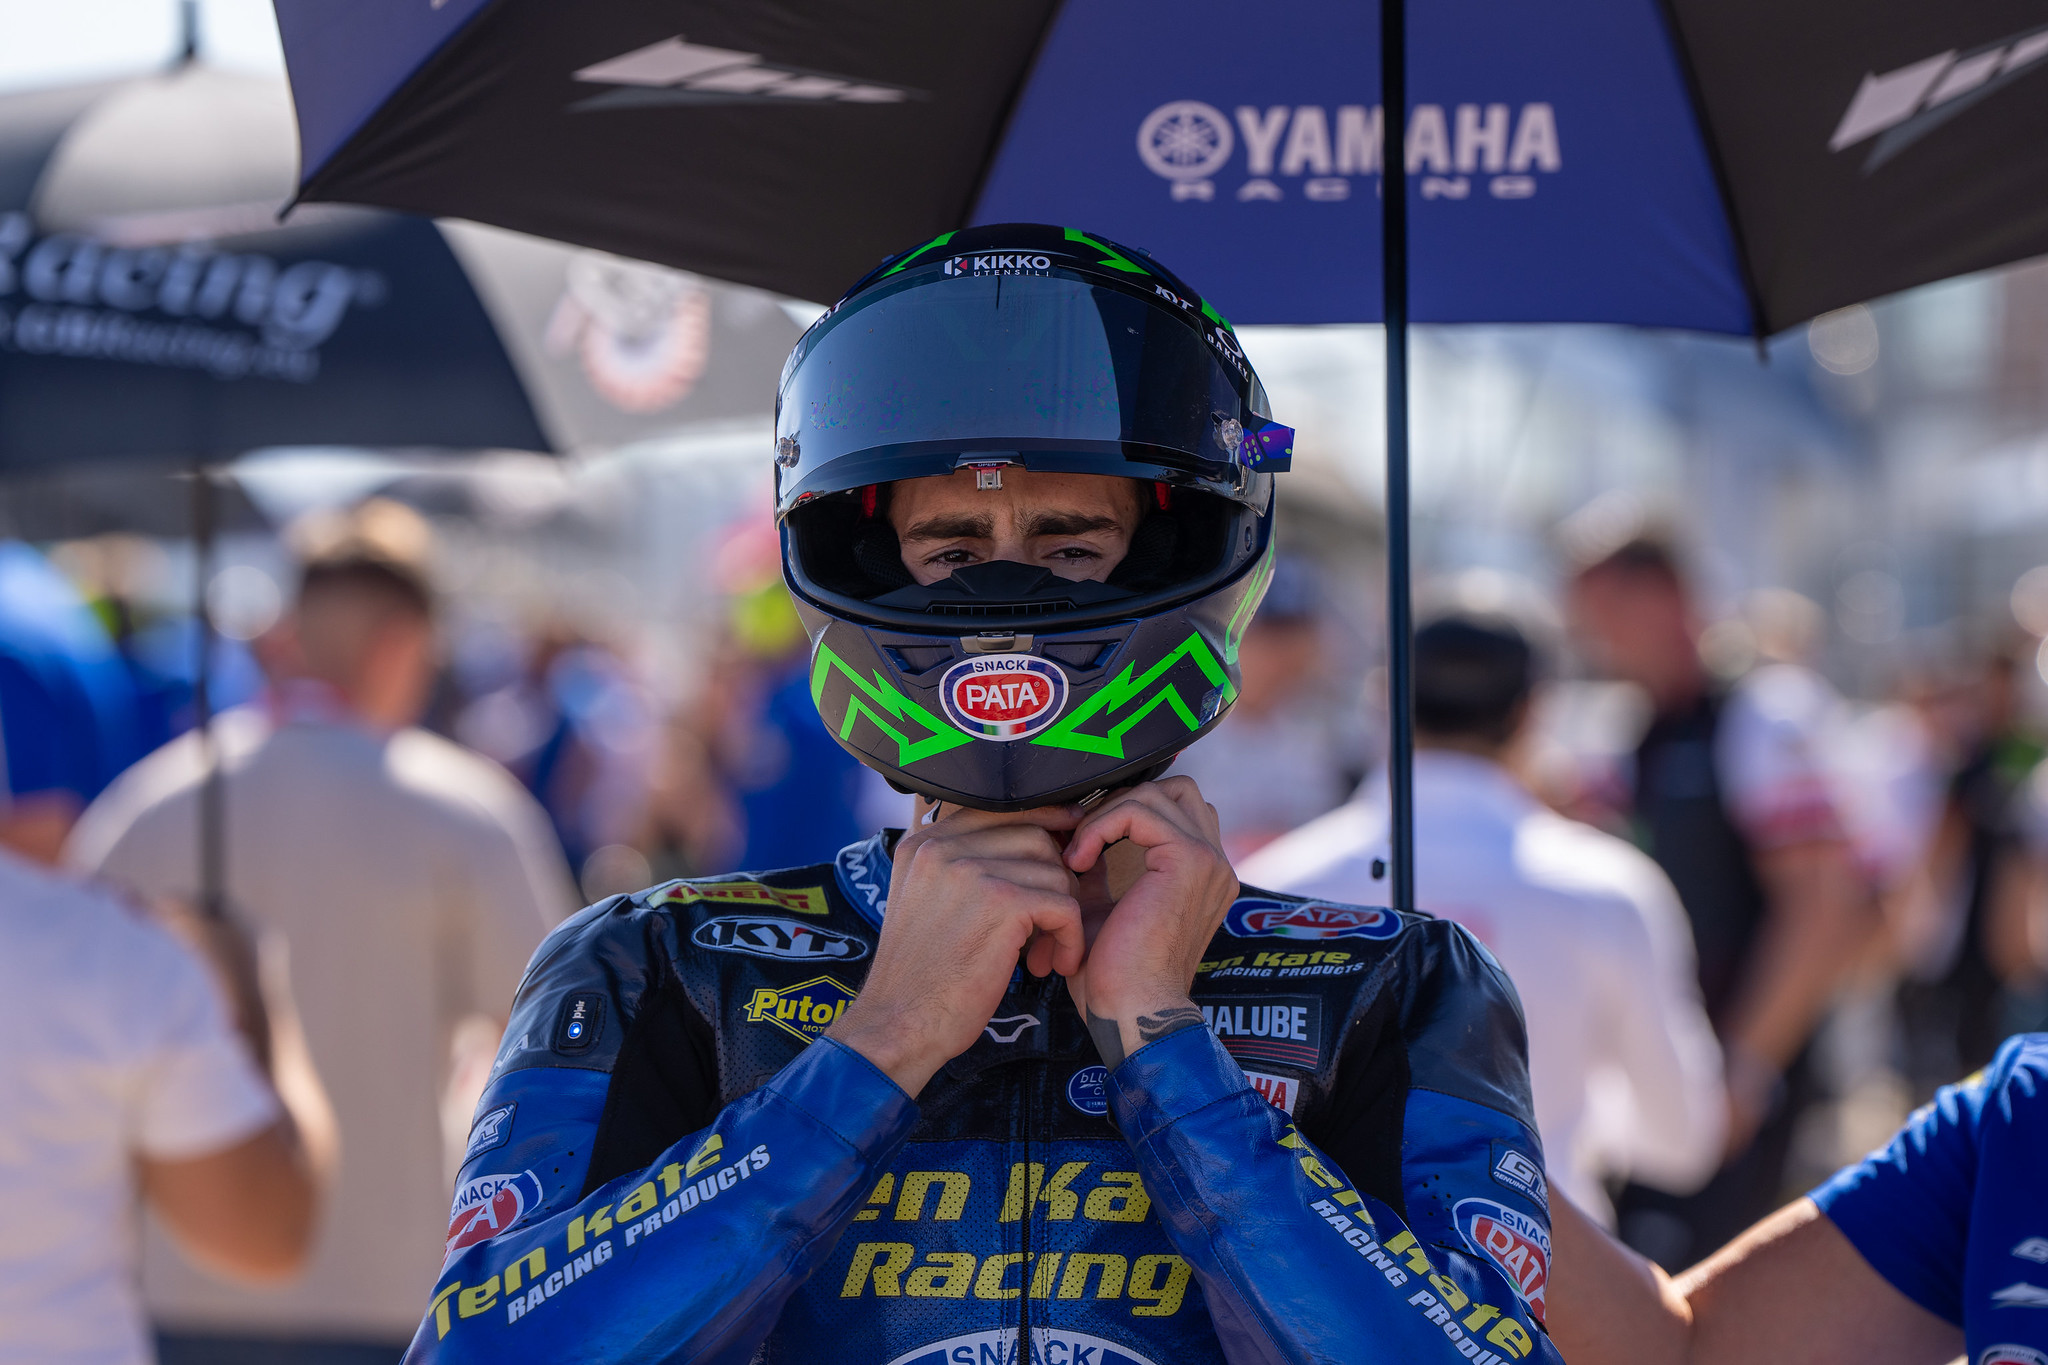 #62 Stefano Manzi - ITA - Ten Kate Racing Yamaha - Yamaha YZF R6